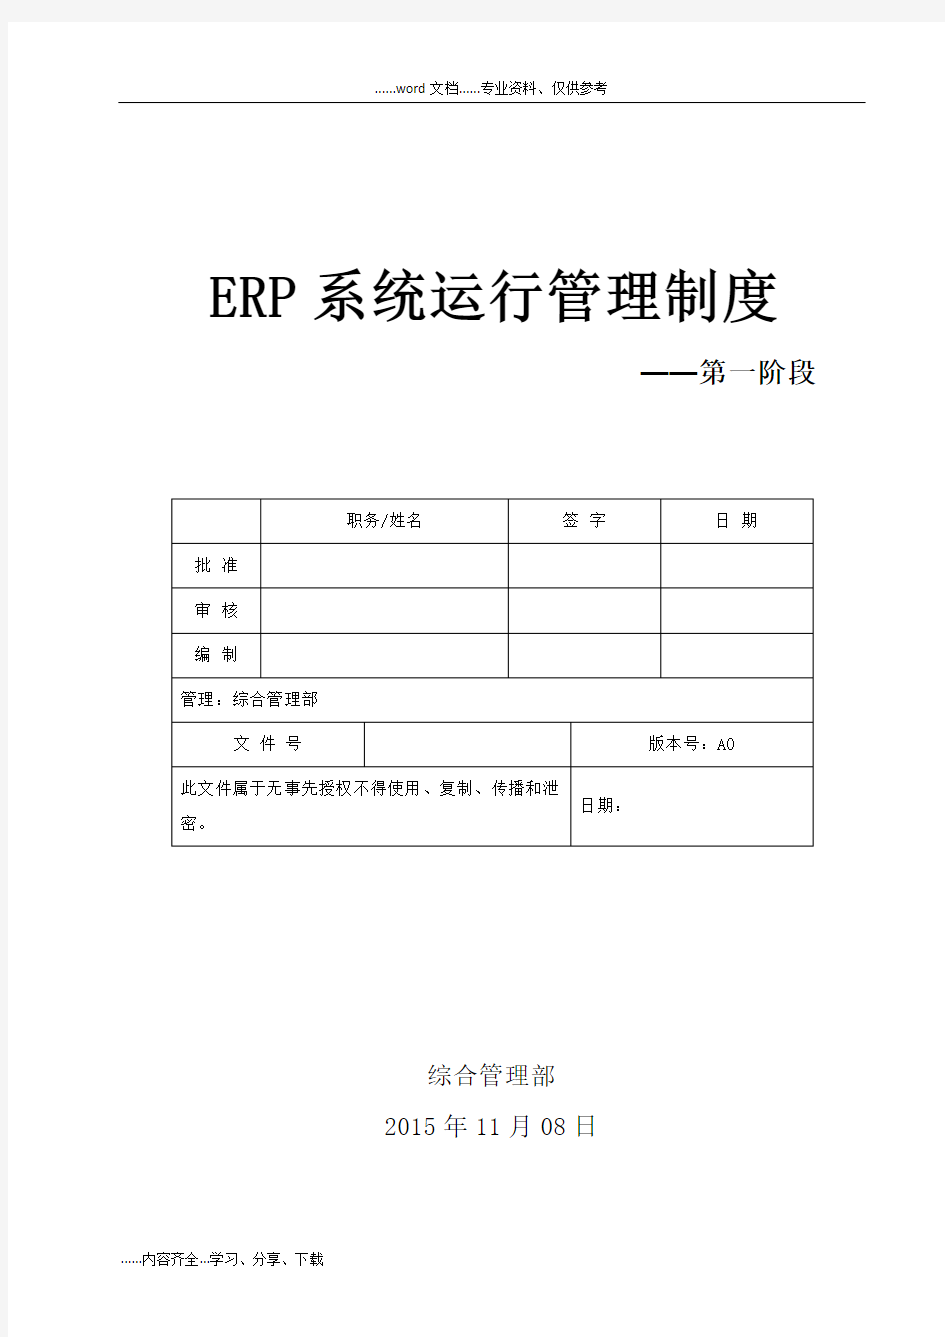 ERP系统运行维护管理制度汇编